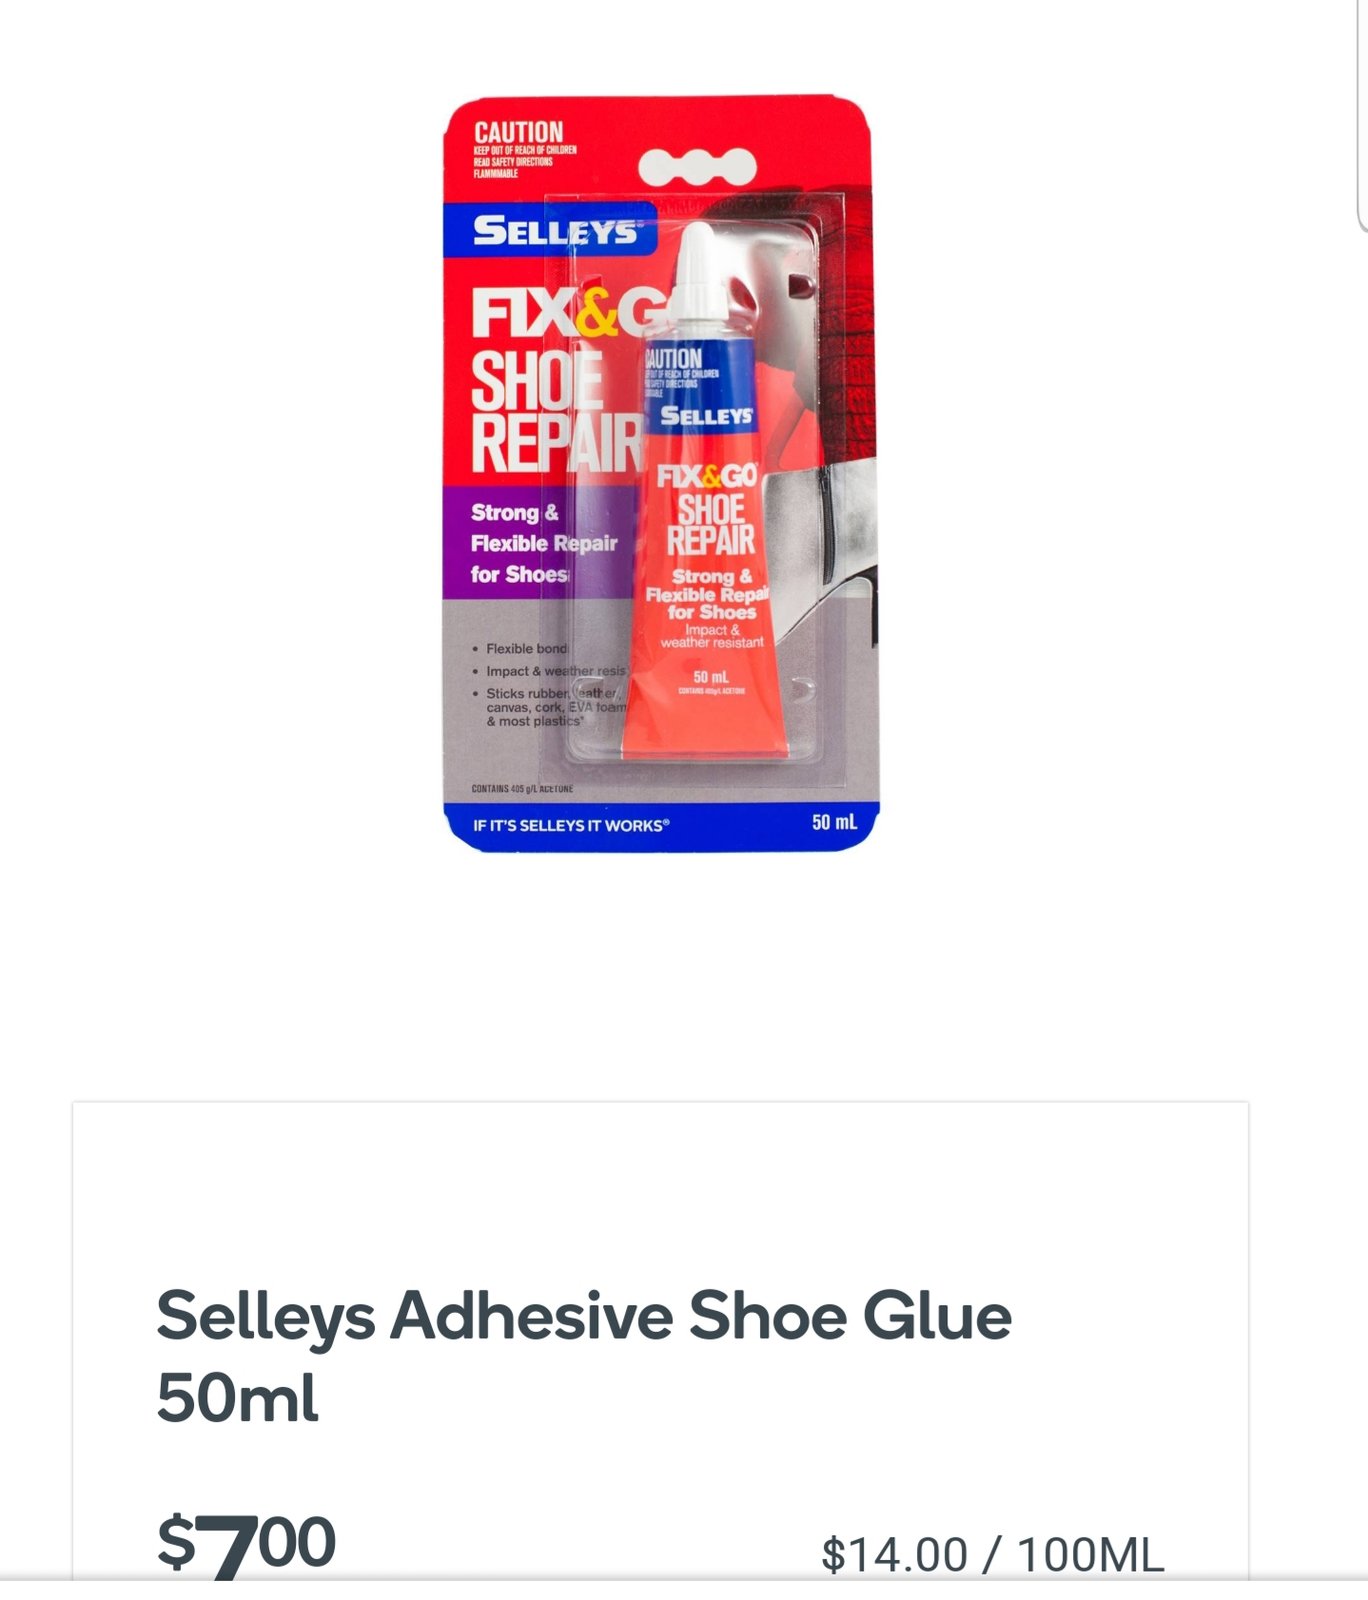 Shoe goo alternatives in Aus?